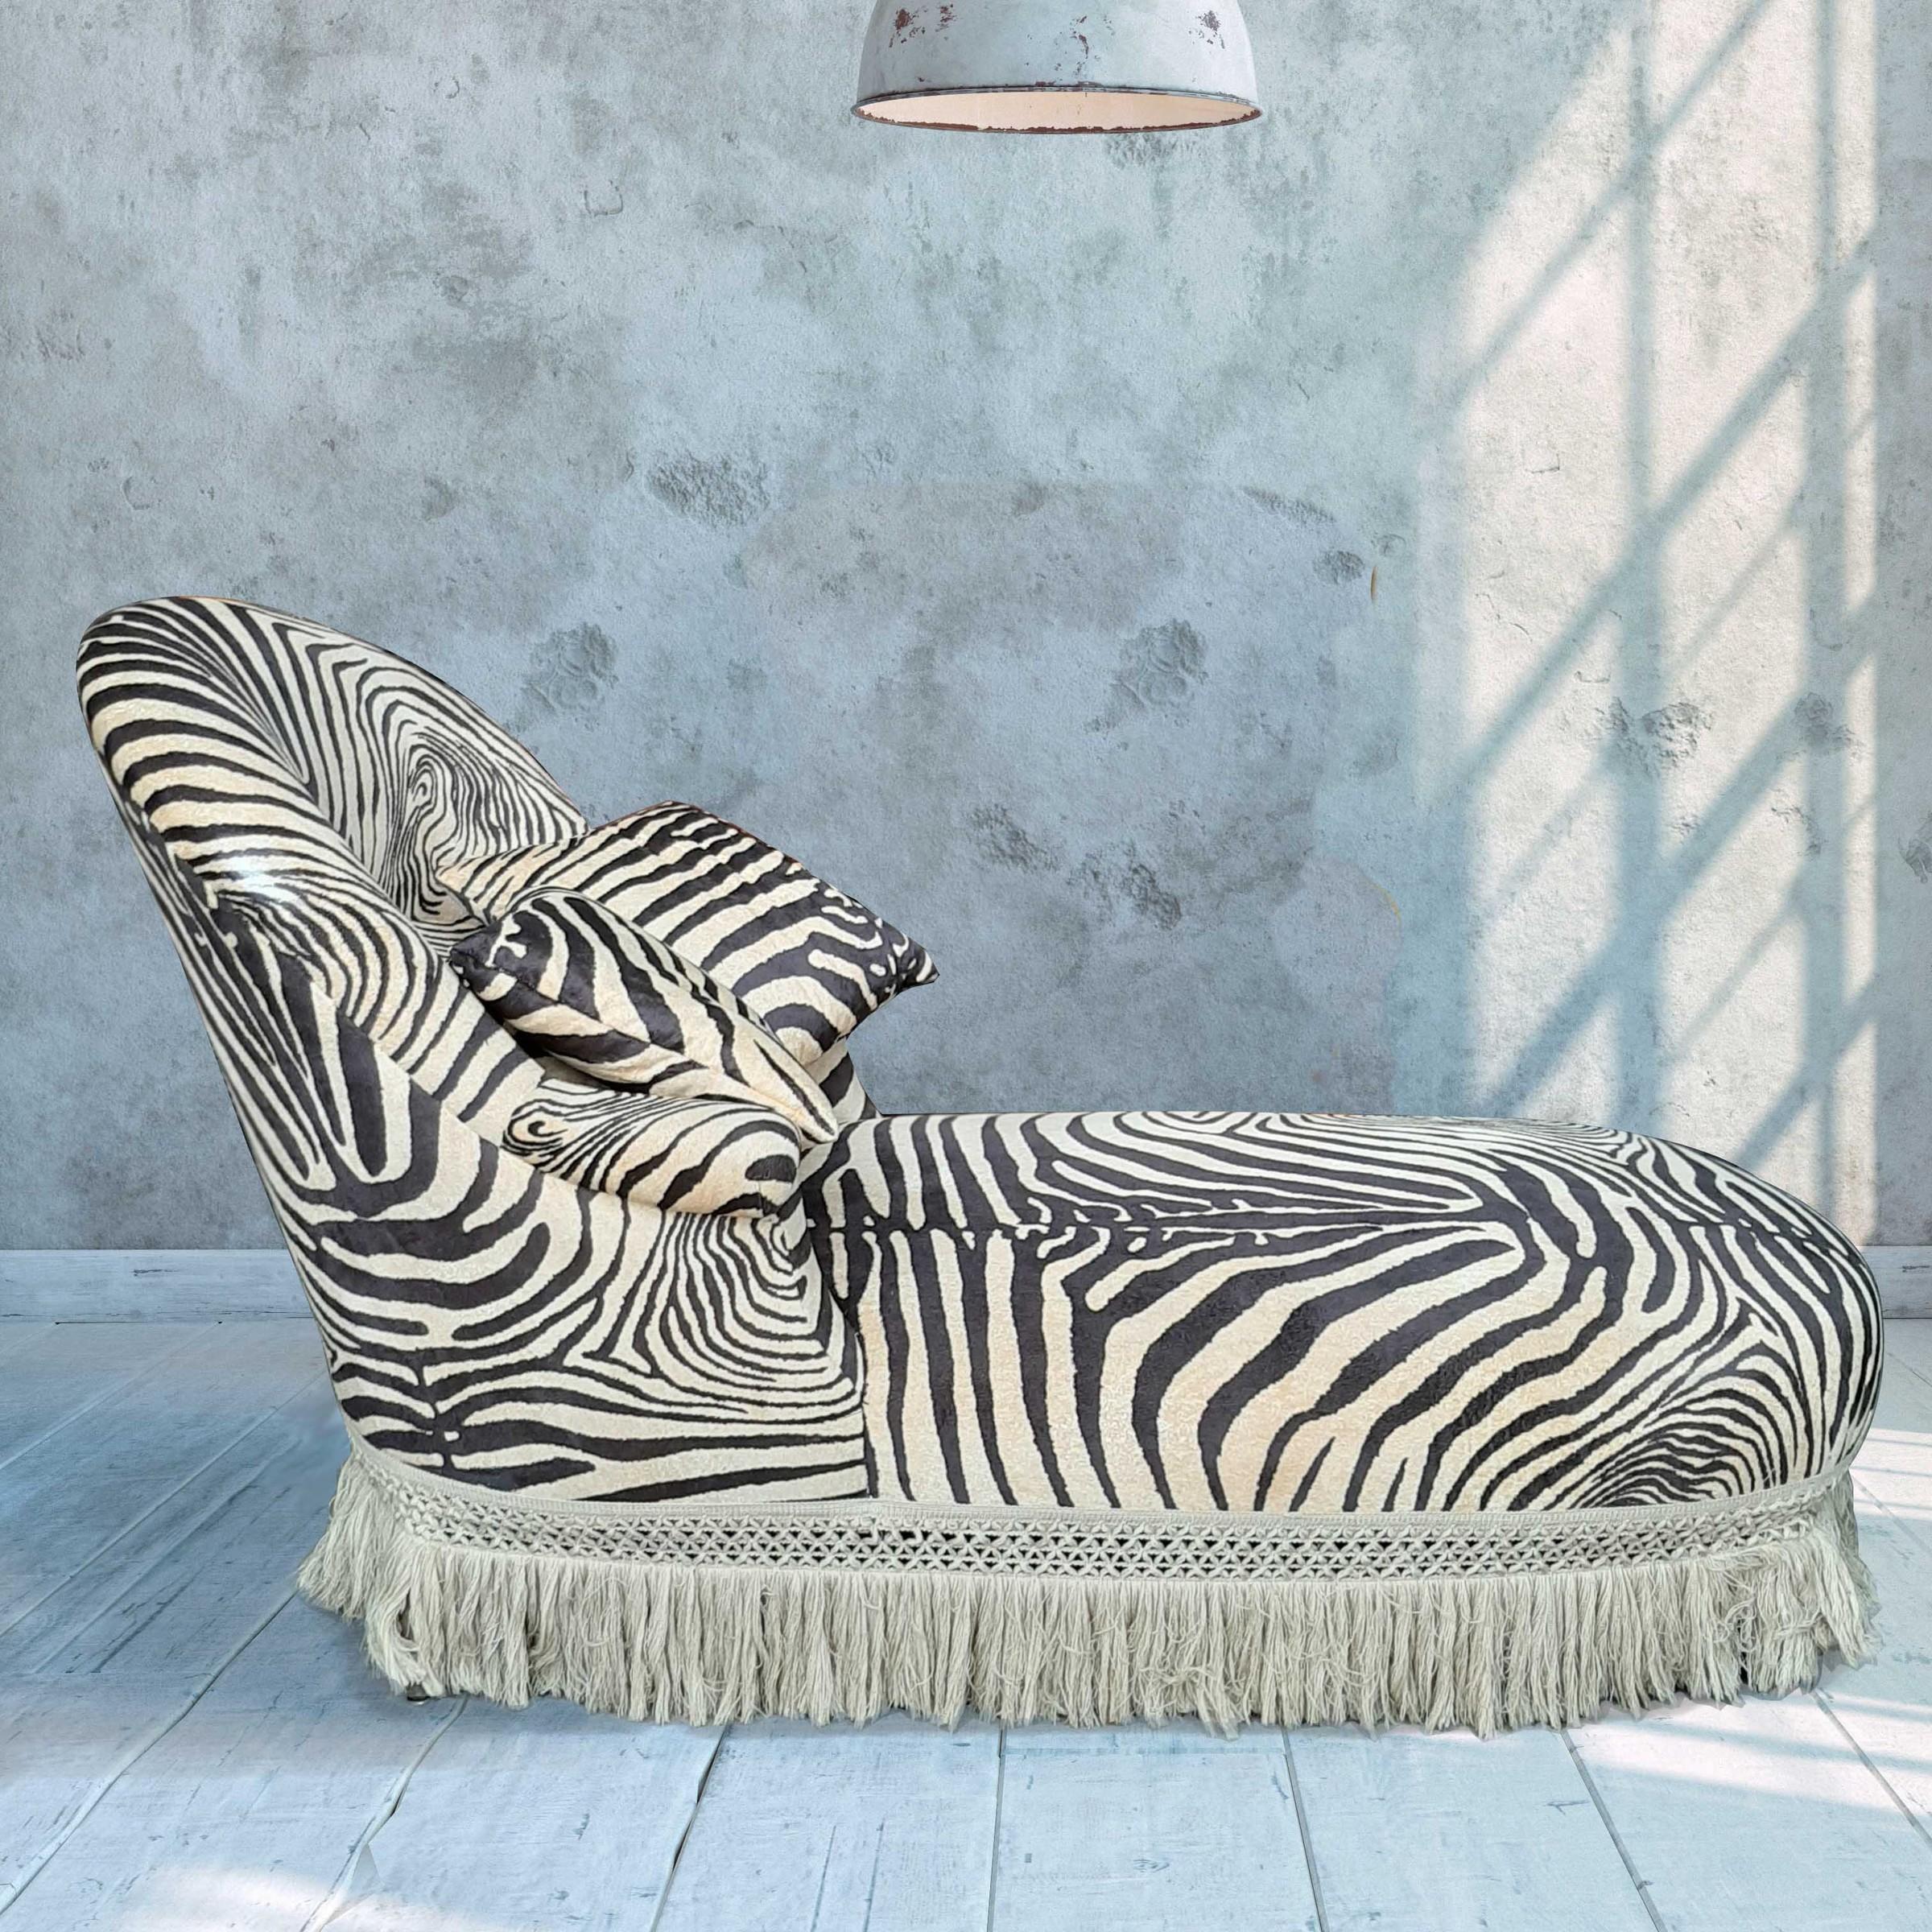 Zebra Print Furniture 31 For Sale On 1stdibs